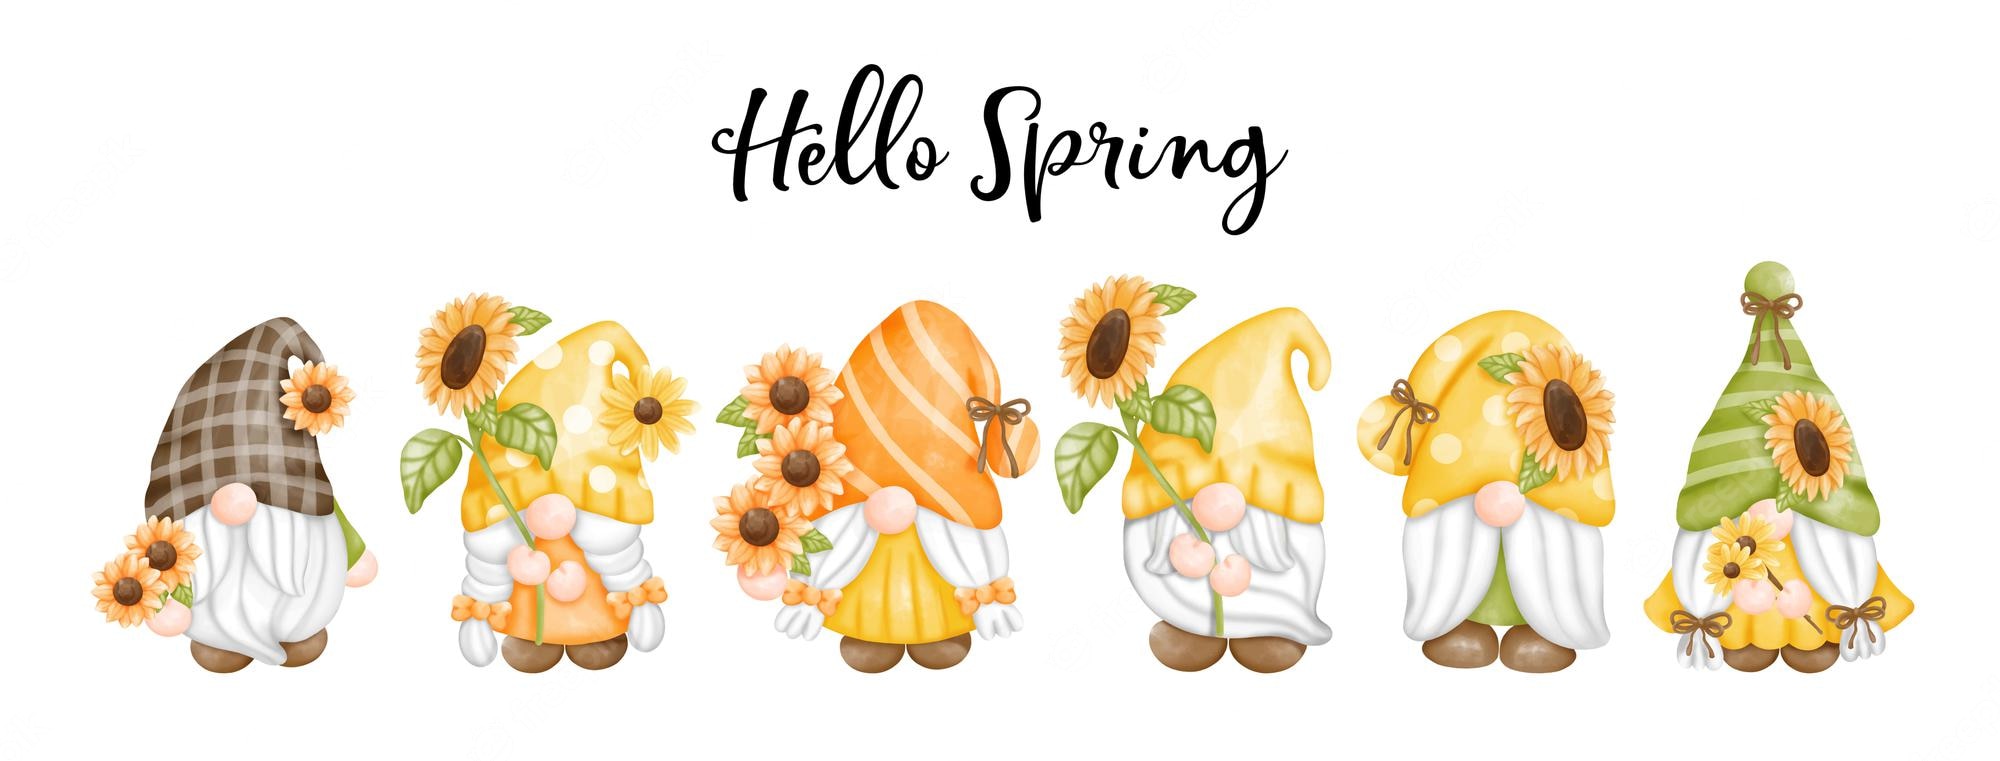 Premium Vector. Digital painting watercolor sunflower gnomes hello spring greetings